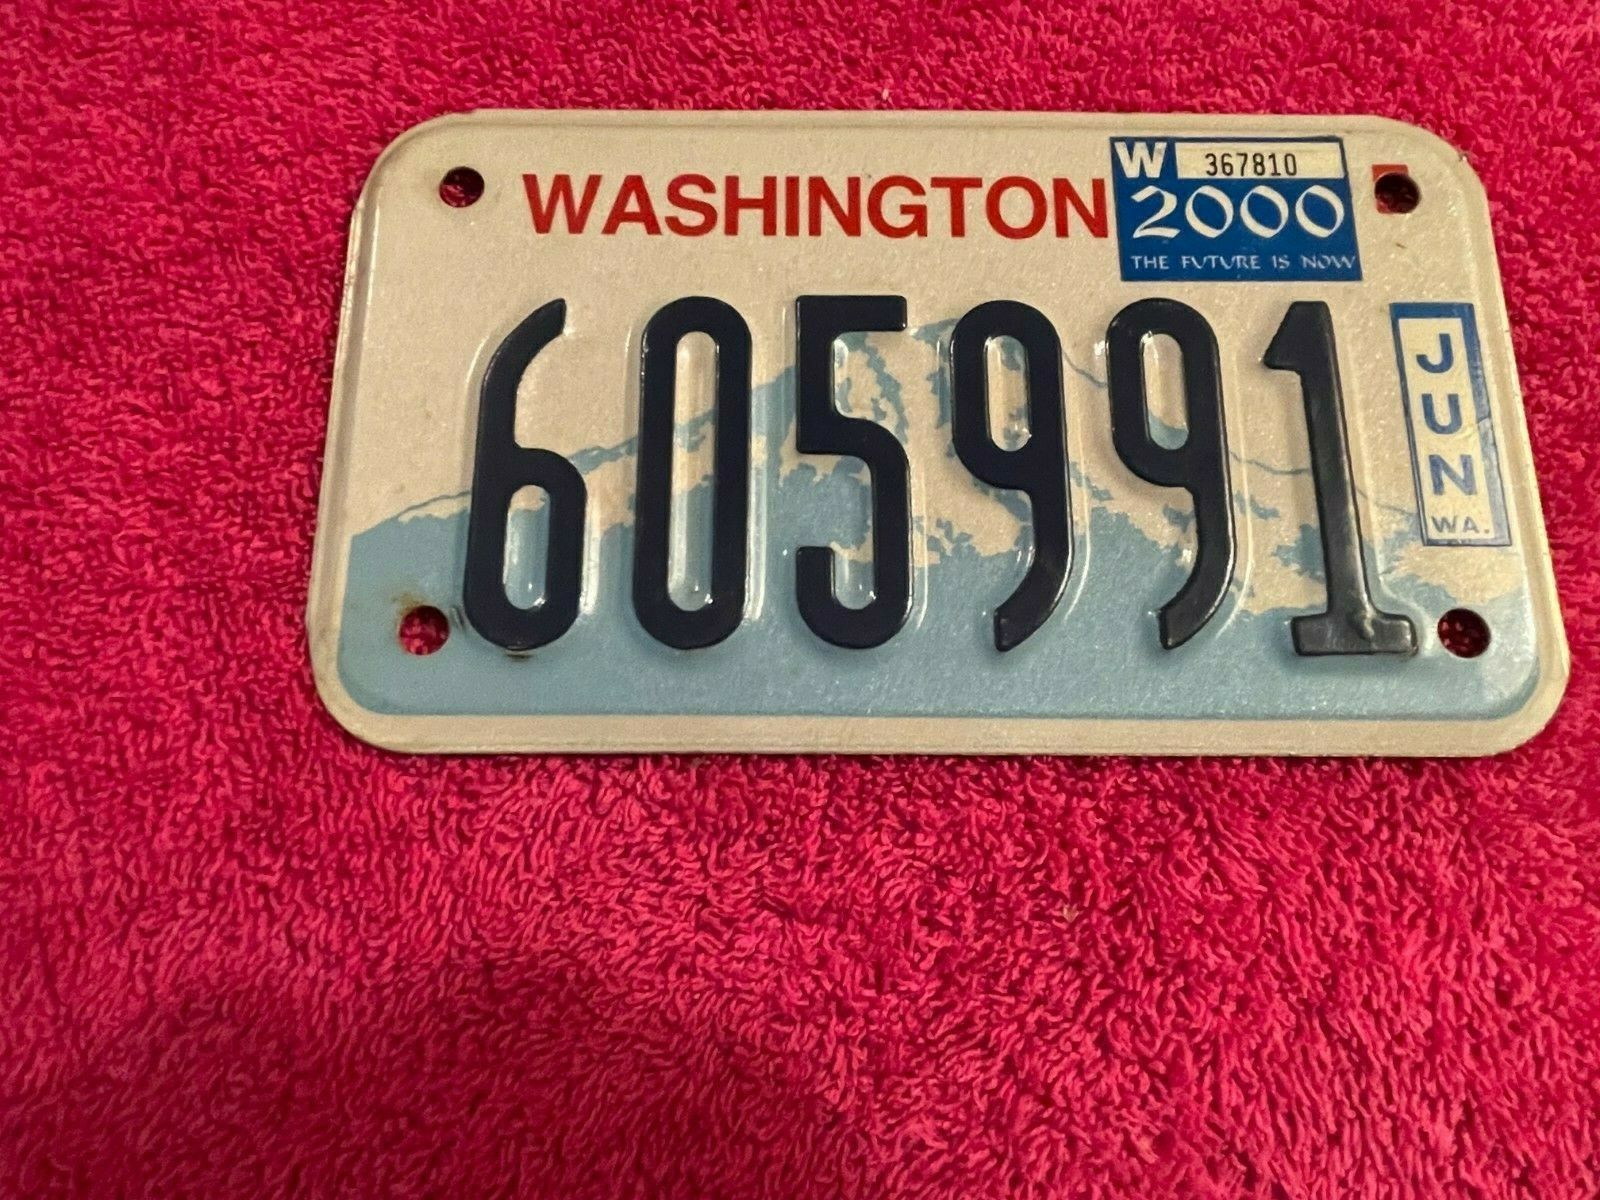 Washington State Wa 2000 Embossed Motorcycle License Plate Tag 605991